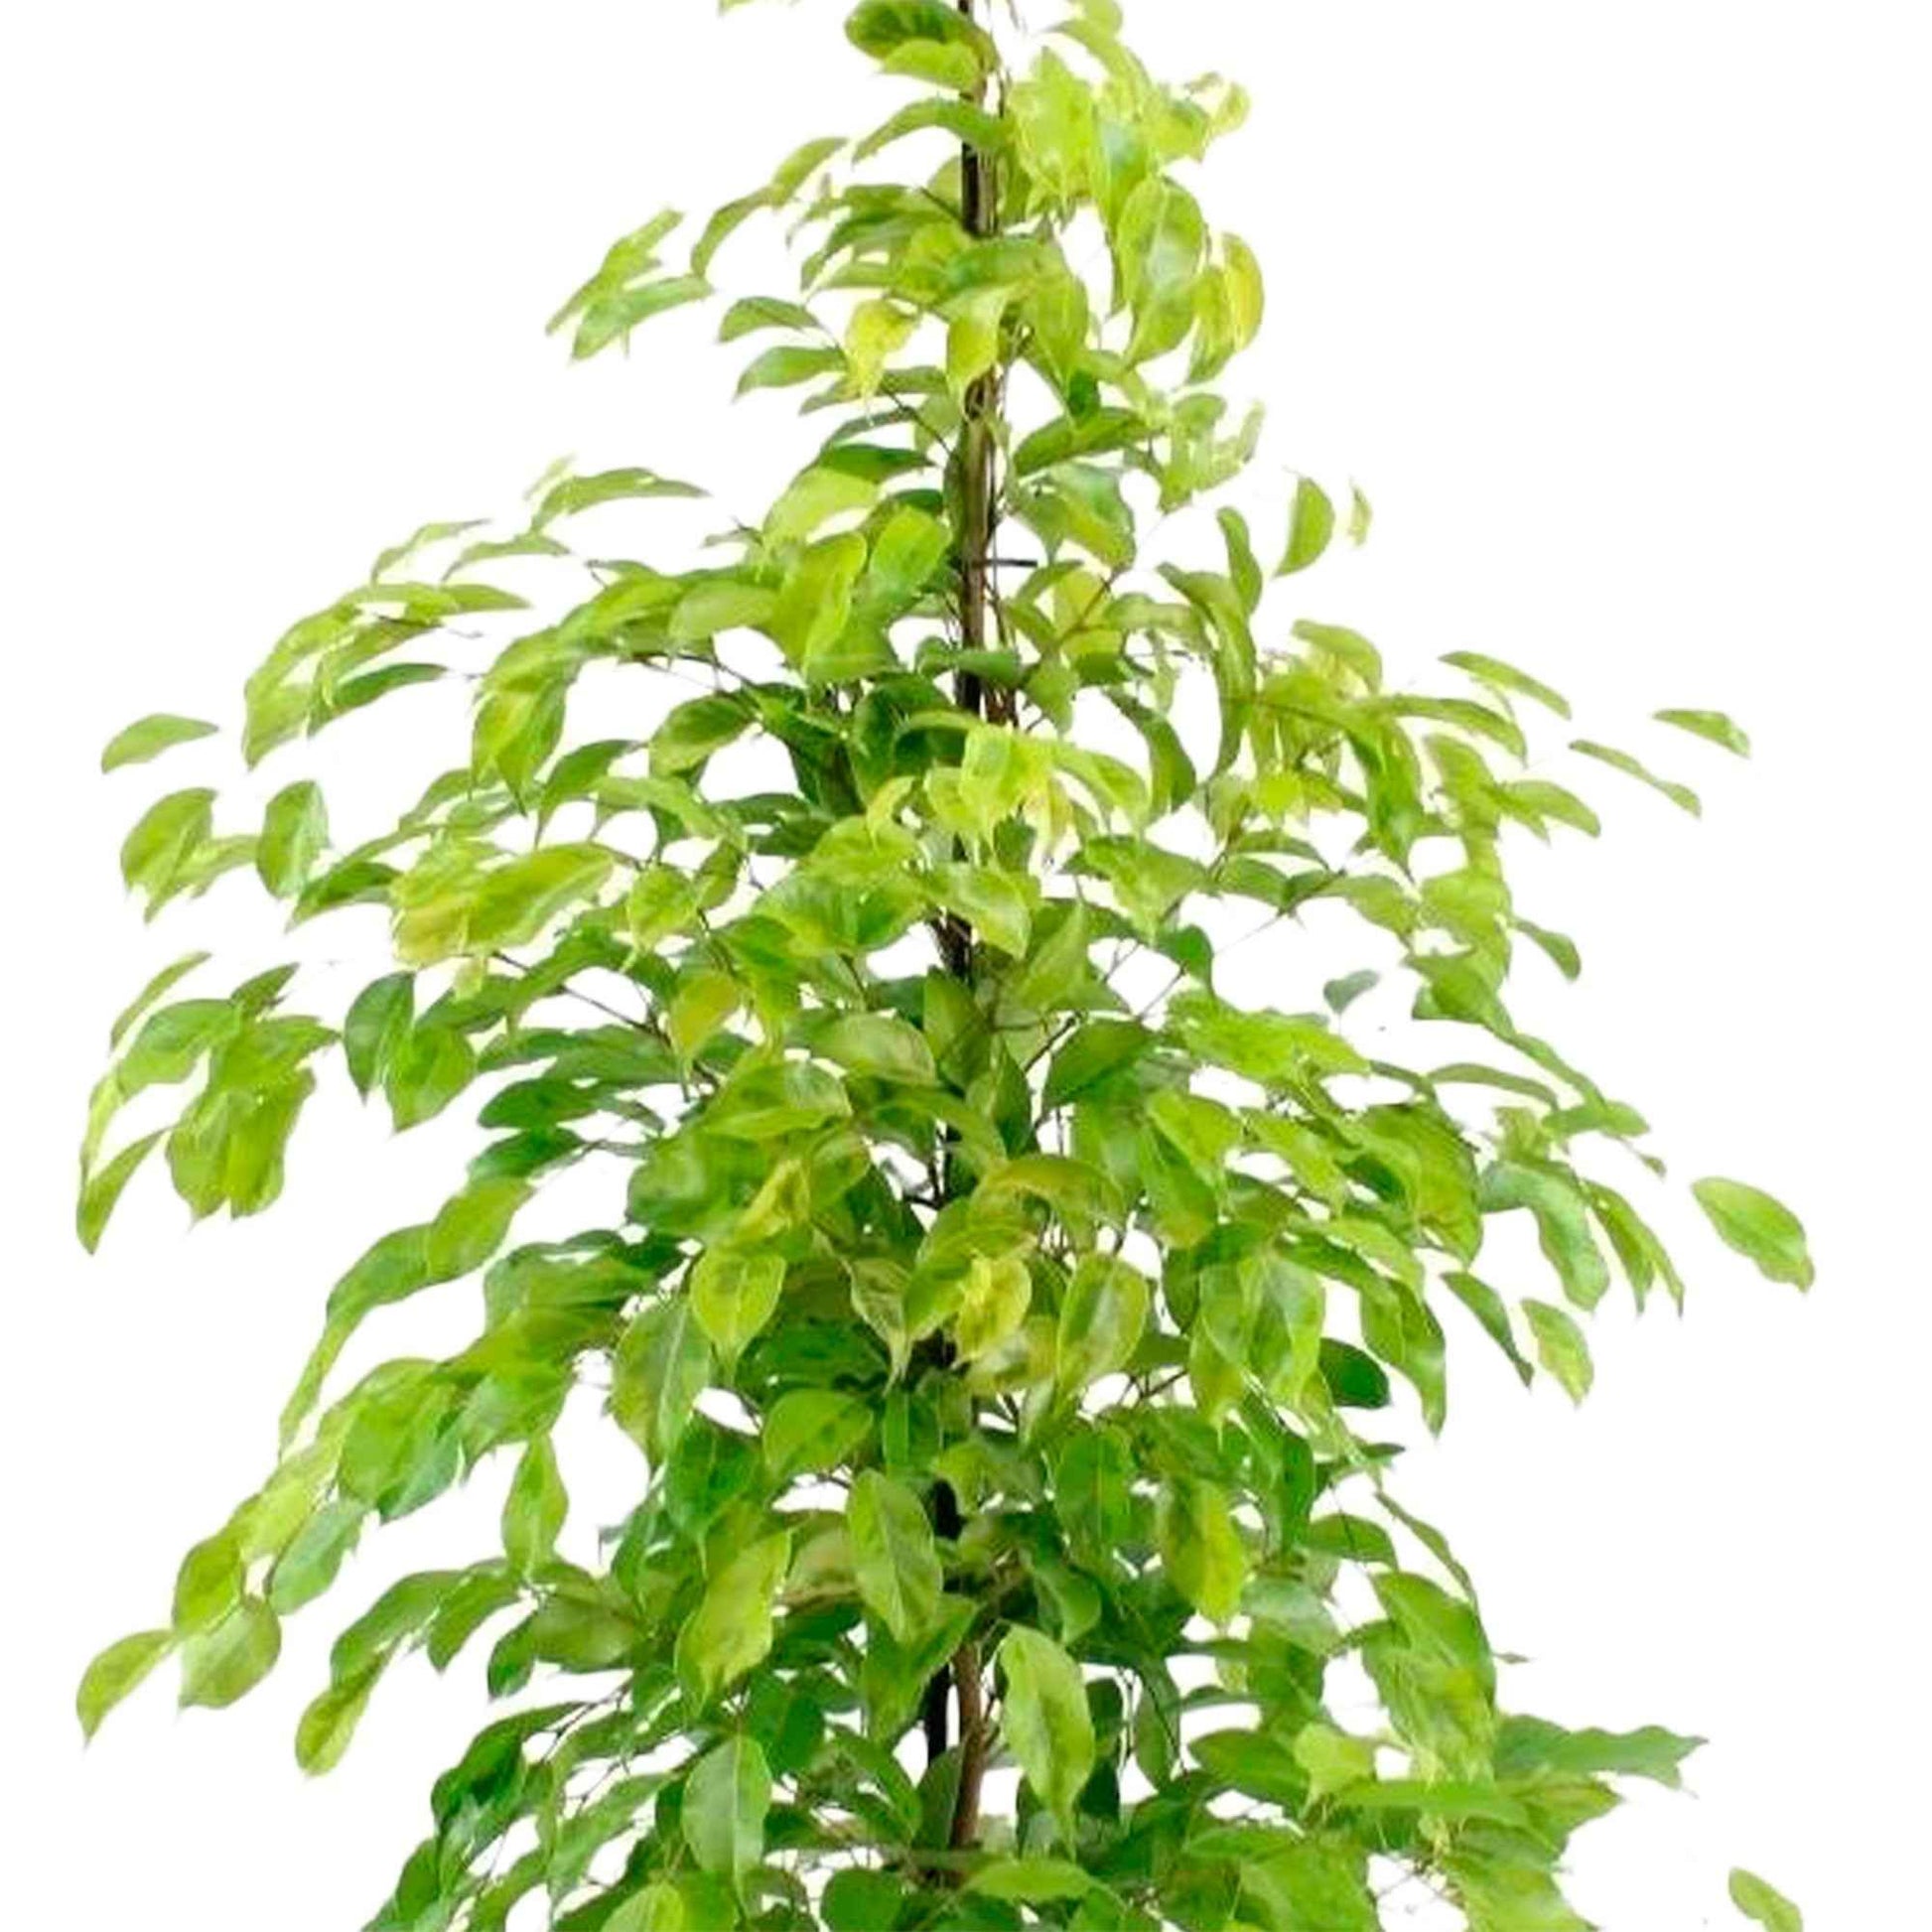 Treurvijg Ficus benjamina 'Reginald' - Groene kamerplanten